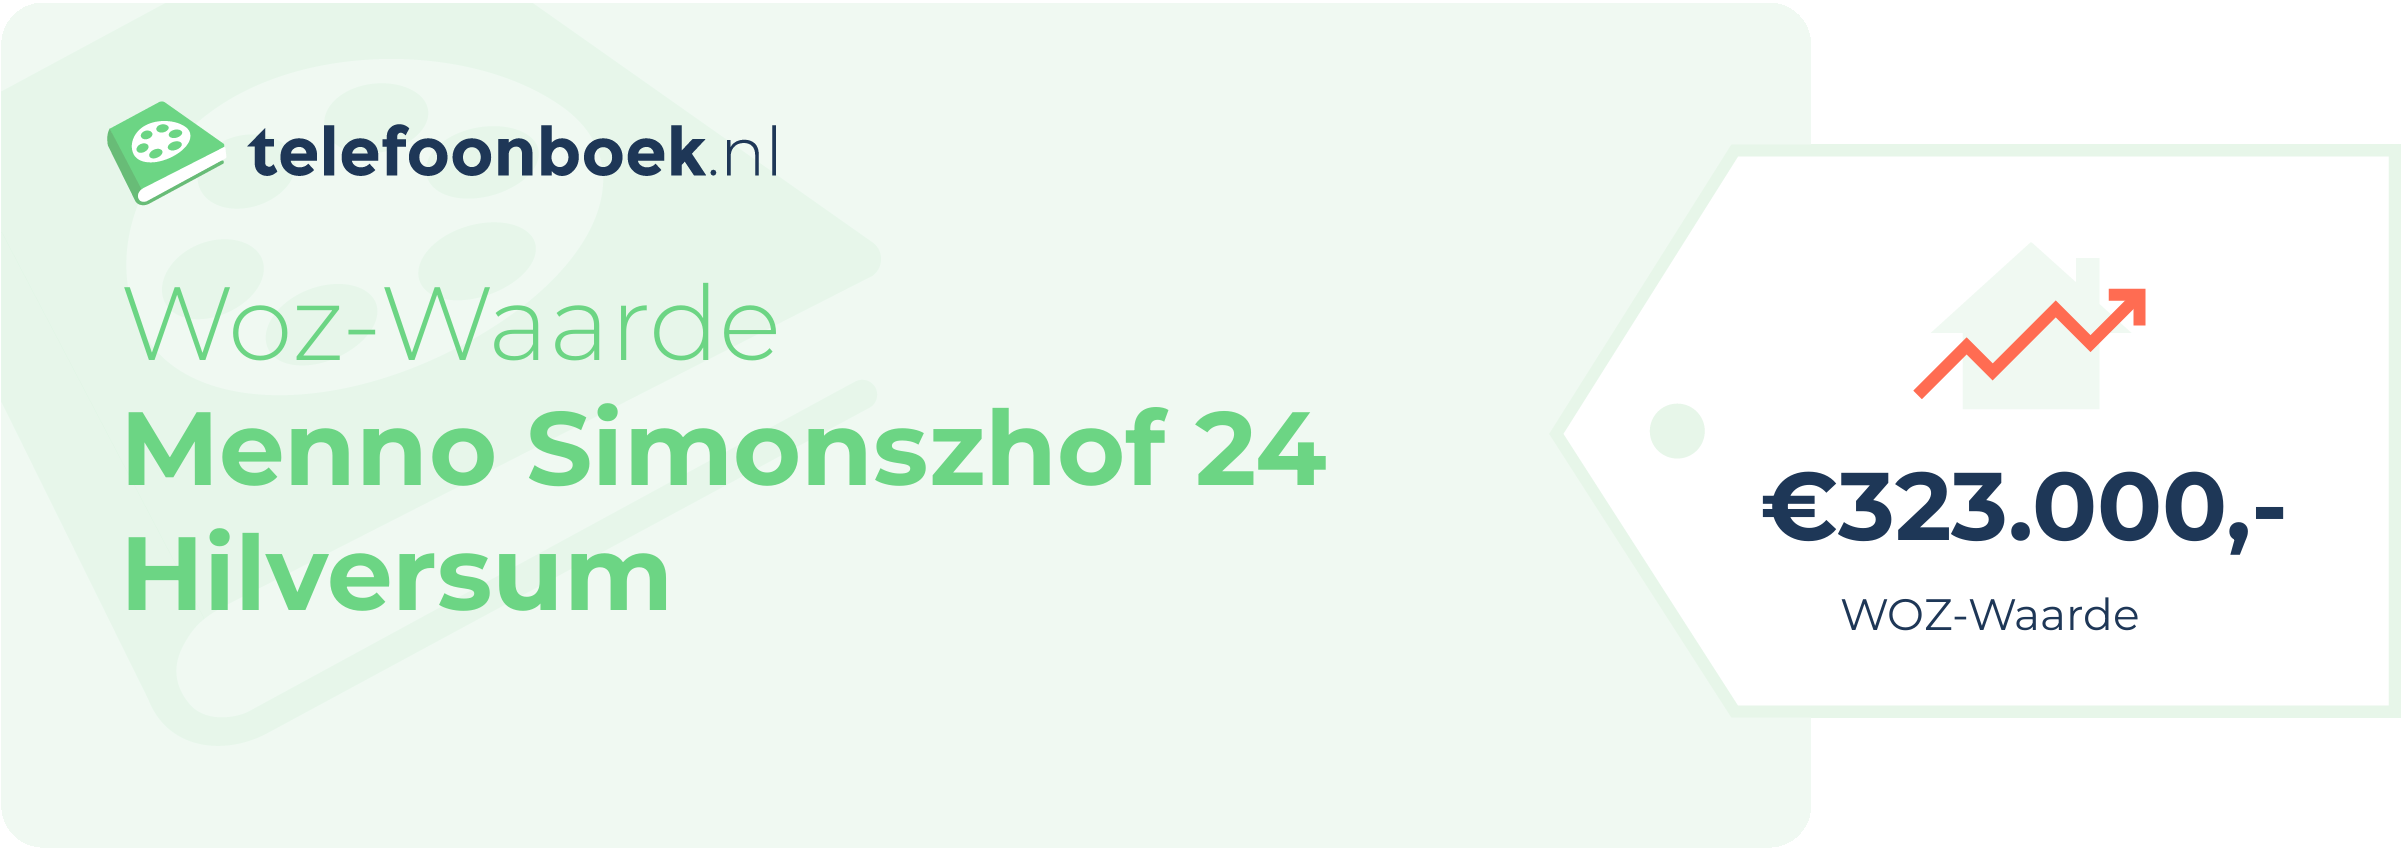 WOZ-waarde Menno Simonszhof 24 Hilversum